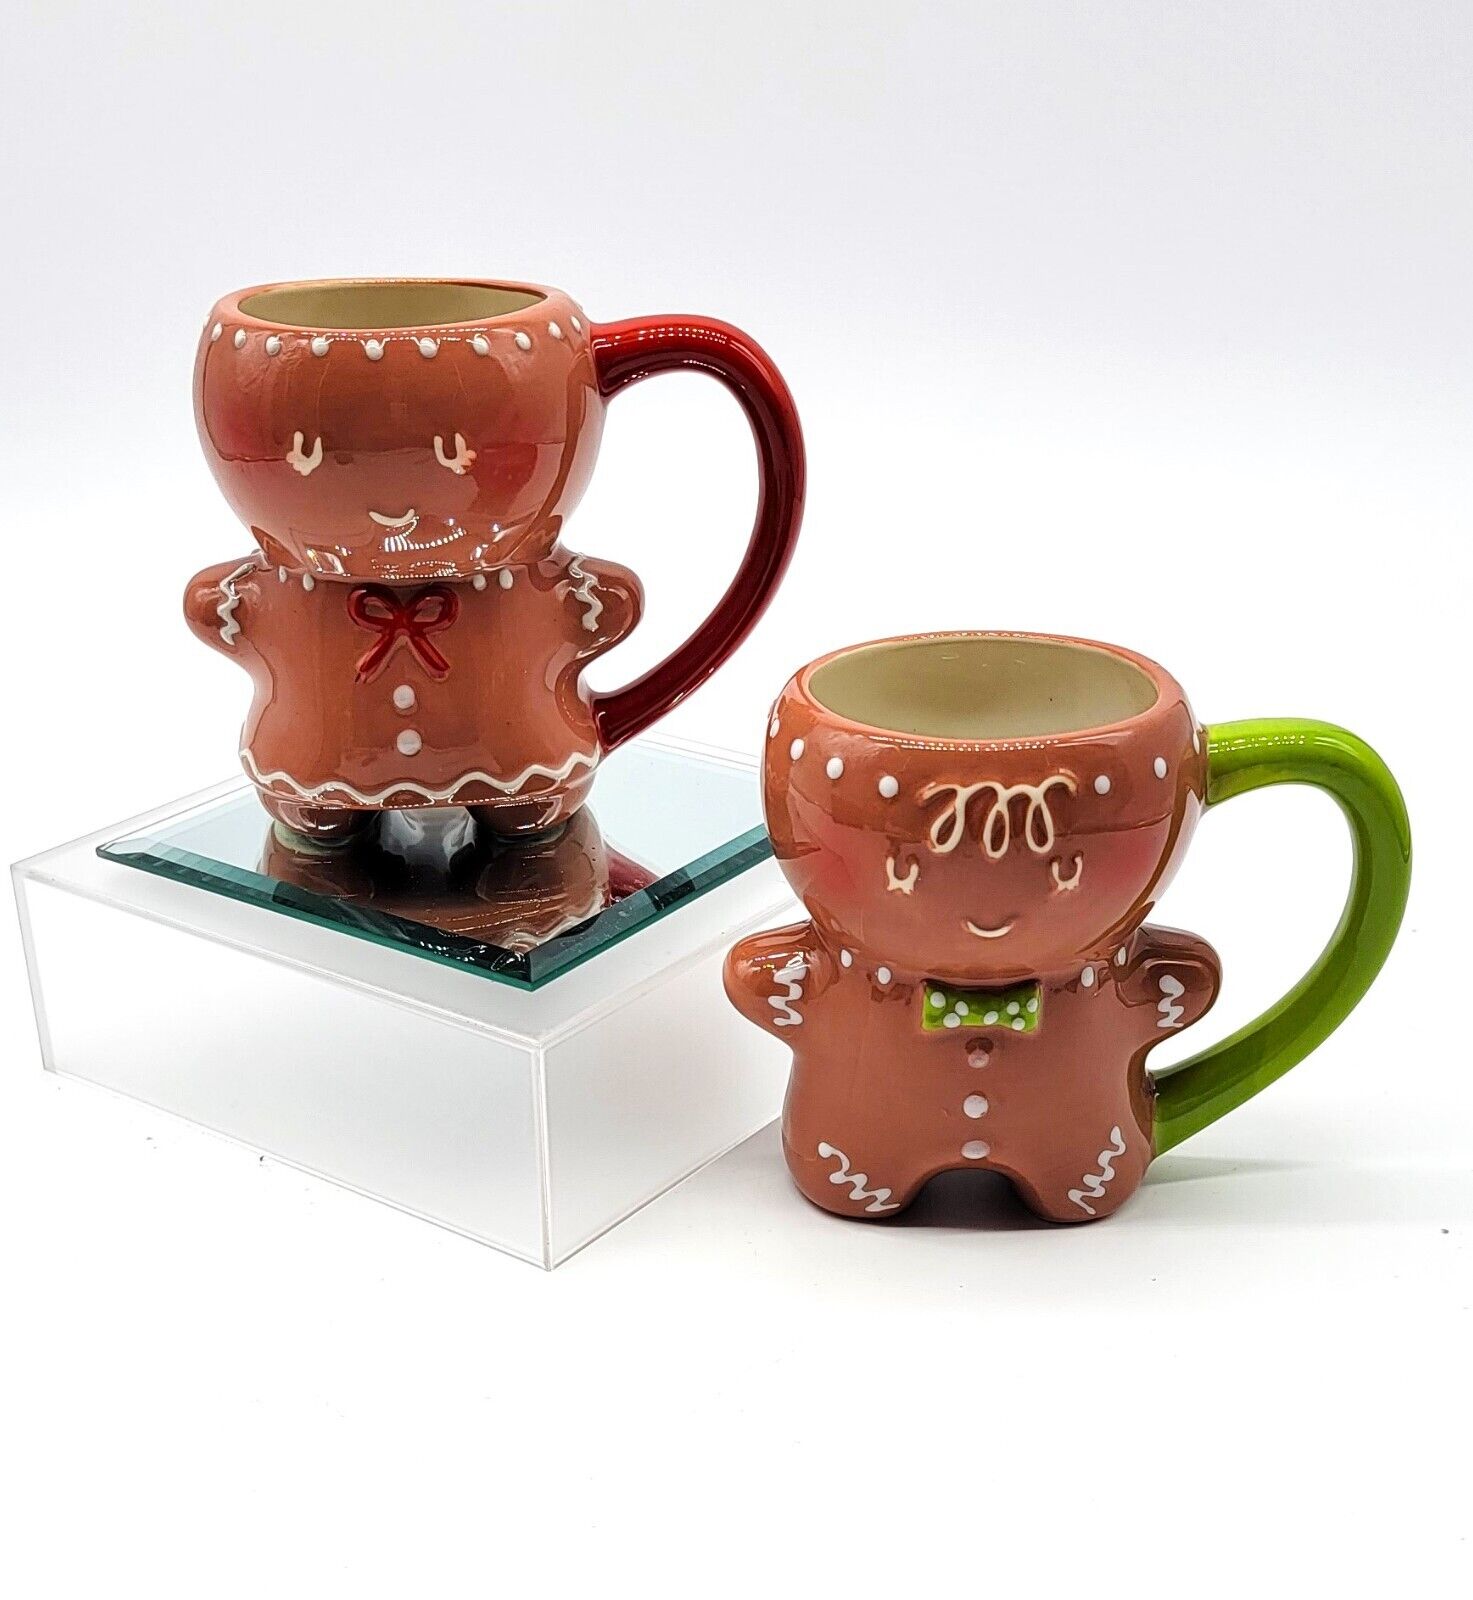 Pair of Threshold Gingerbread Boy and Gingerbread Girl Cute Holiday Ceramic Mugs